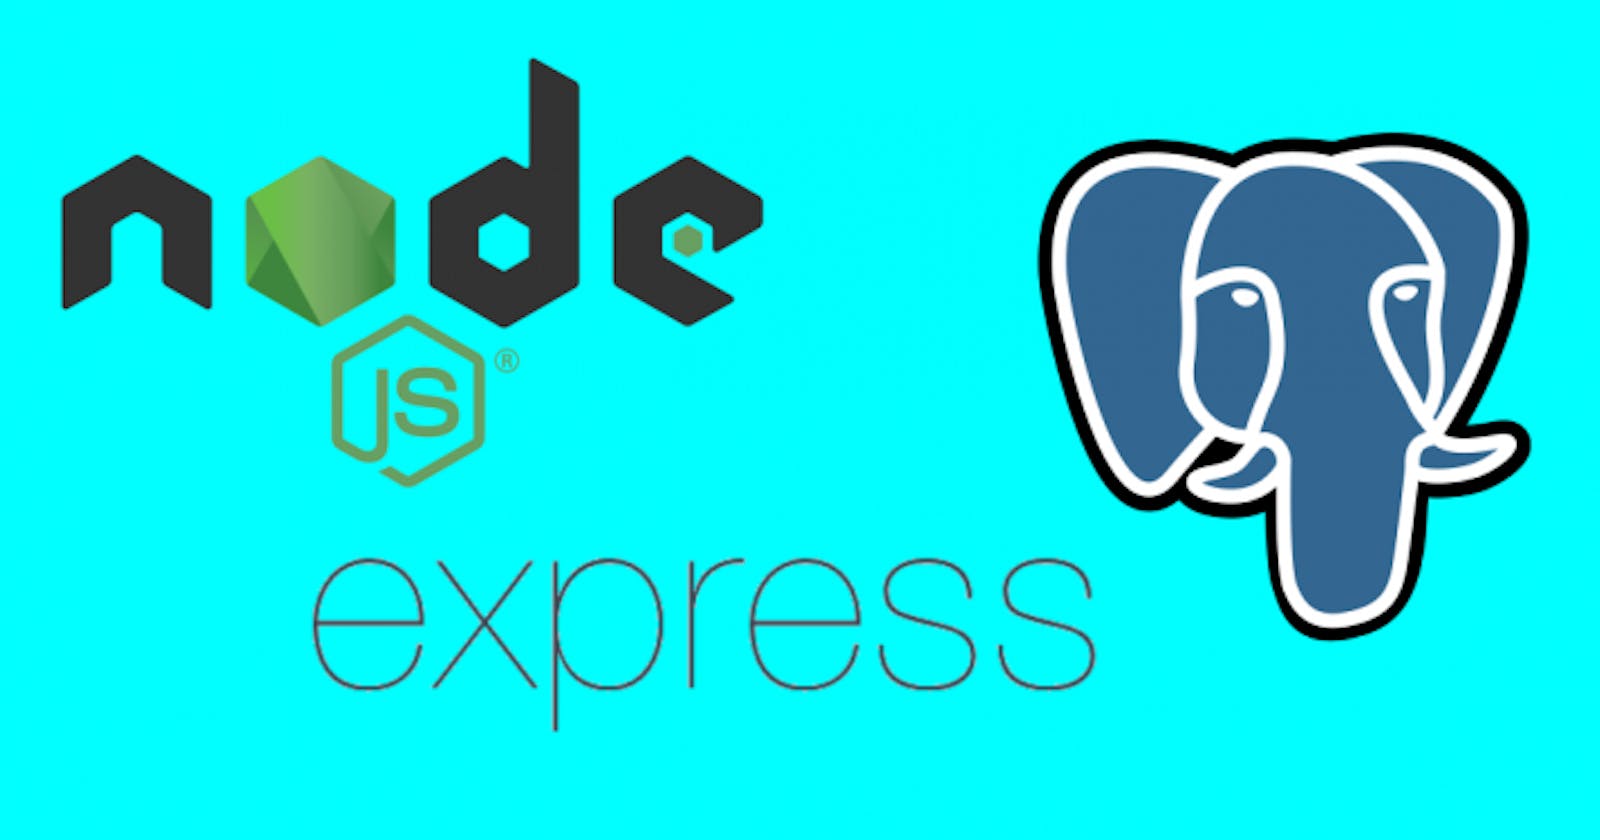 CRUD REST API with Node.js, Express.js, and PostgreSQL